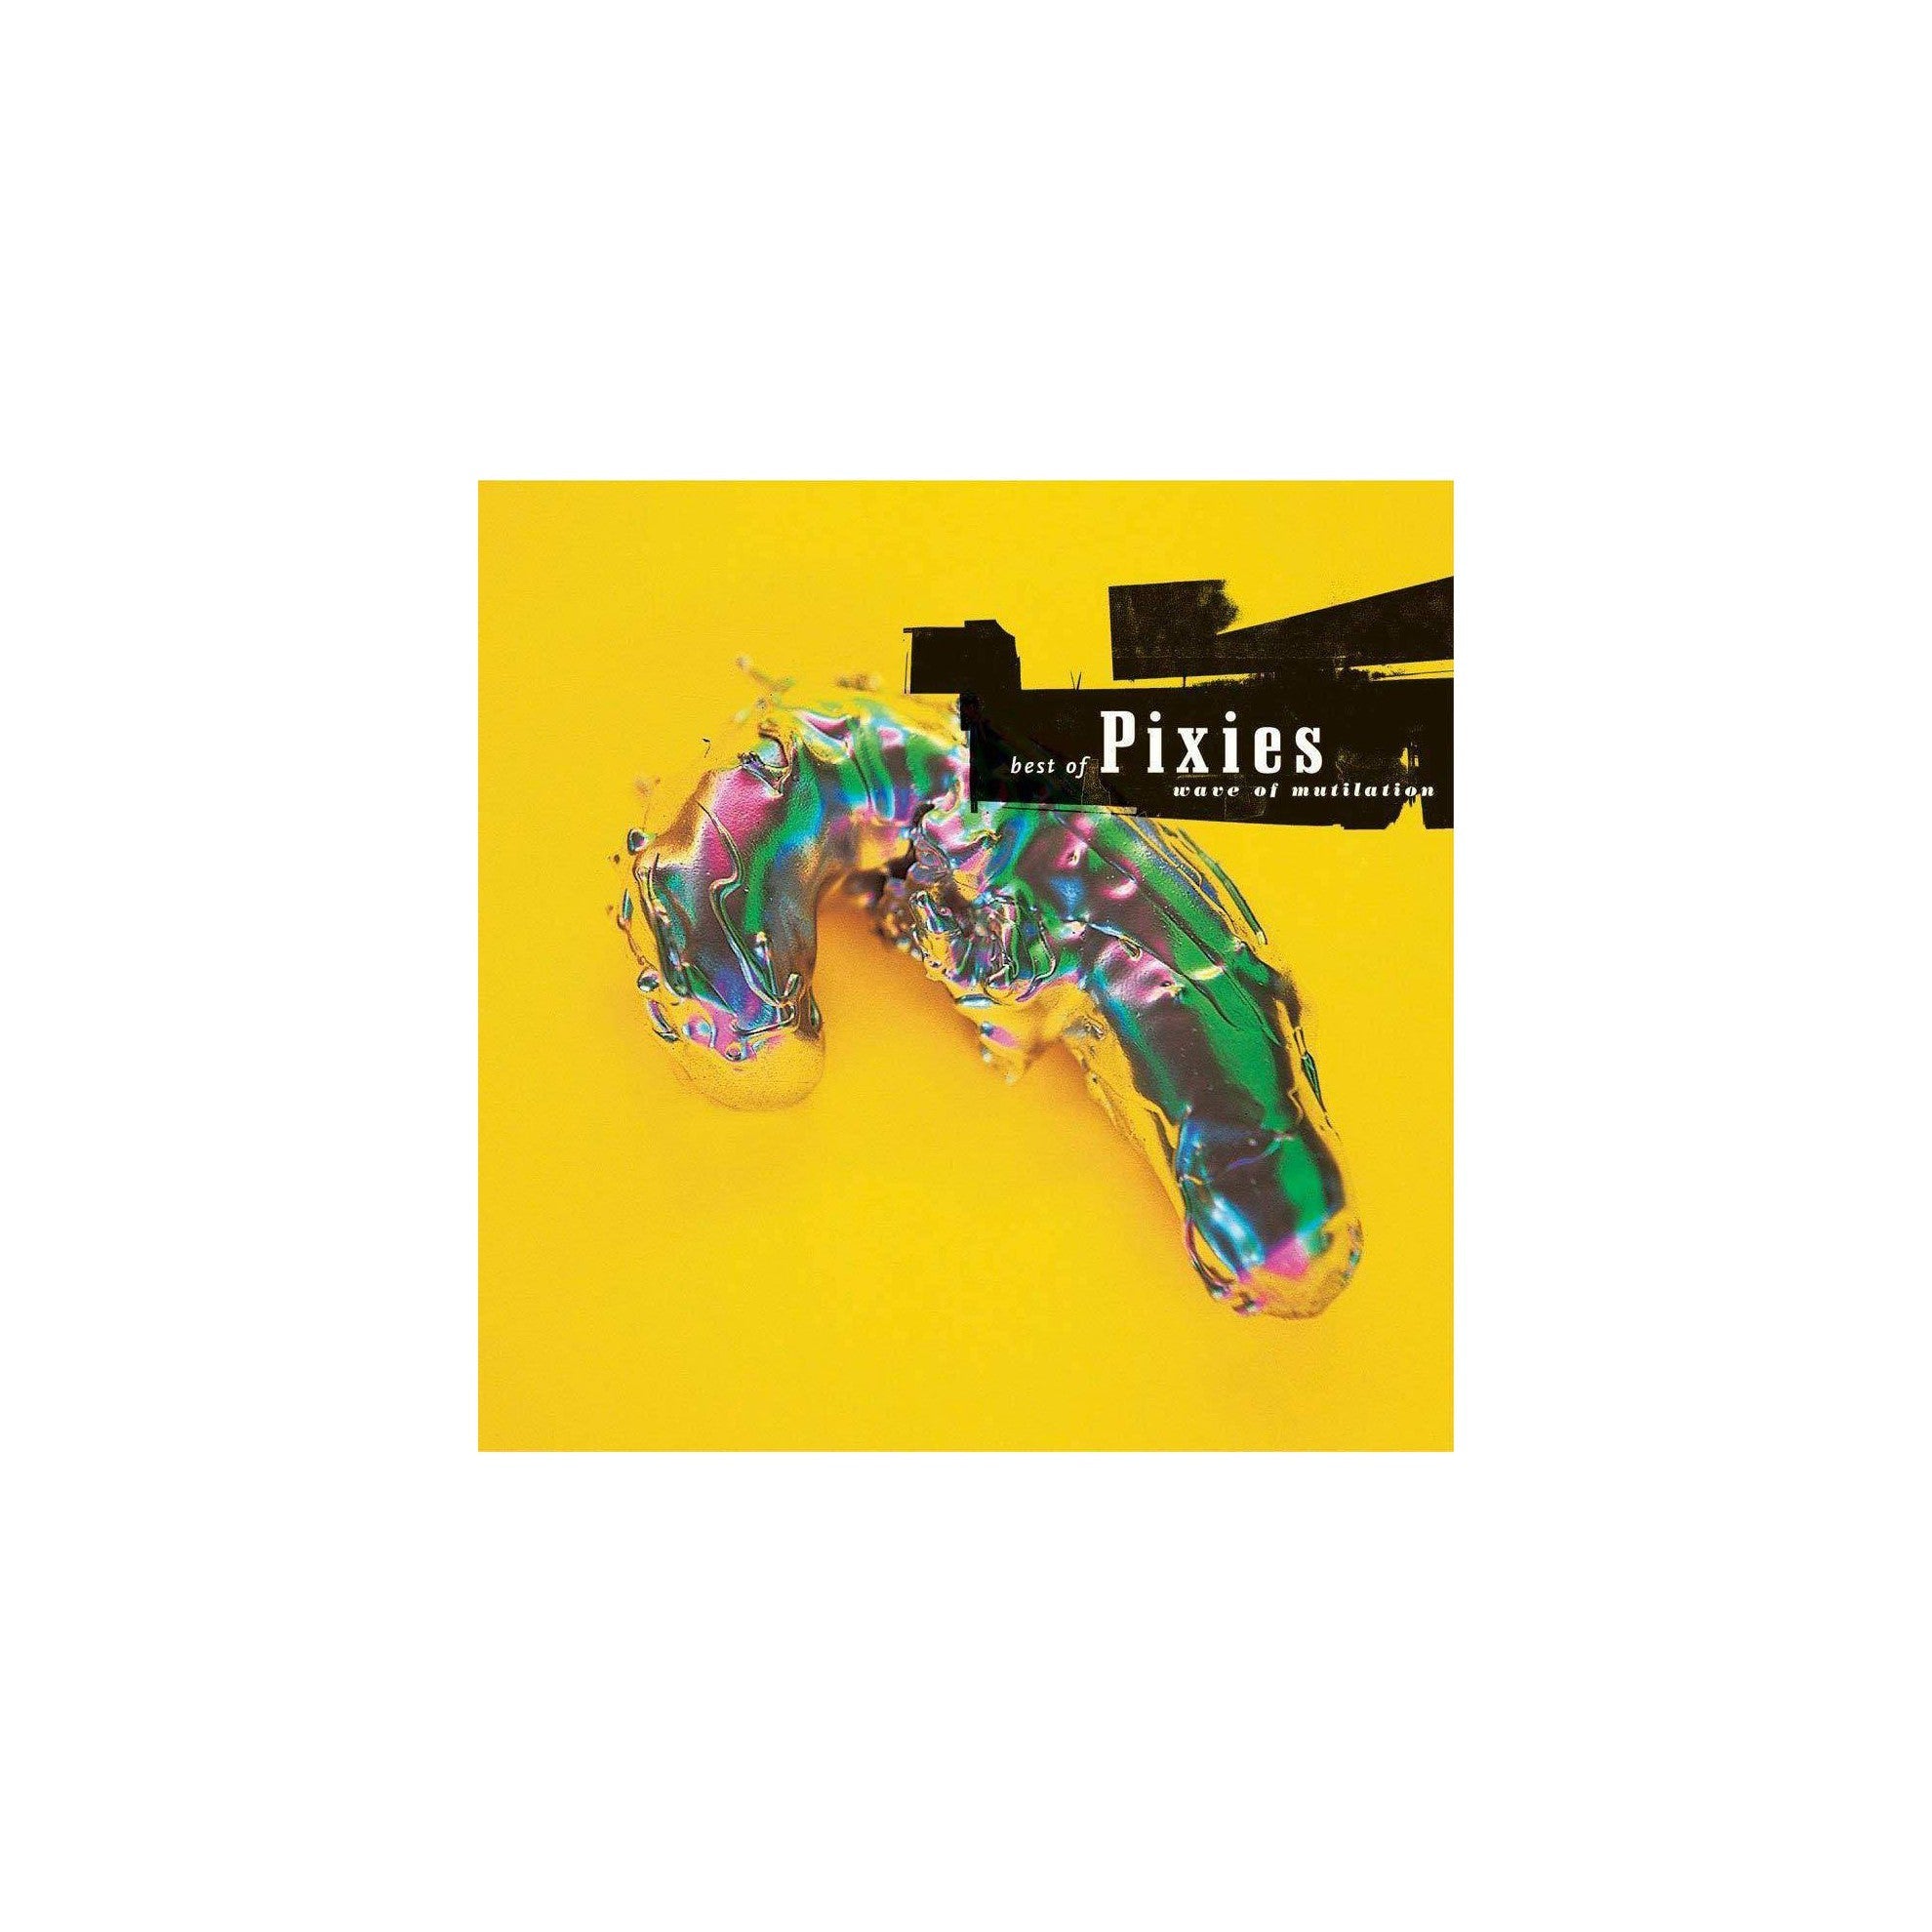 Pixies: Wave of Mutilation Best of Pixes: 2LP Black Vinyl in Gatefold - Steadfast Records